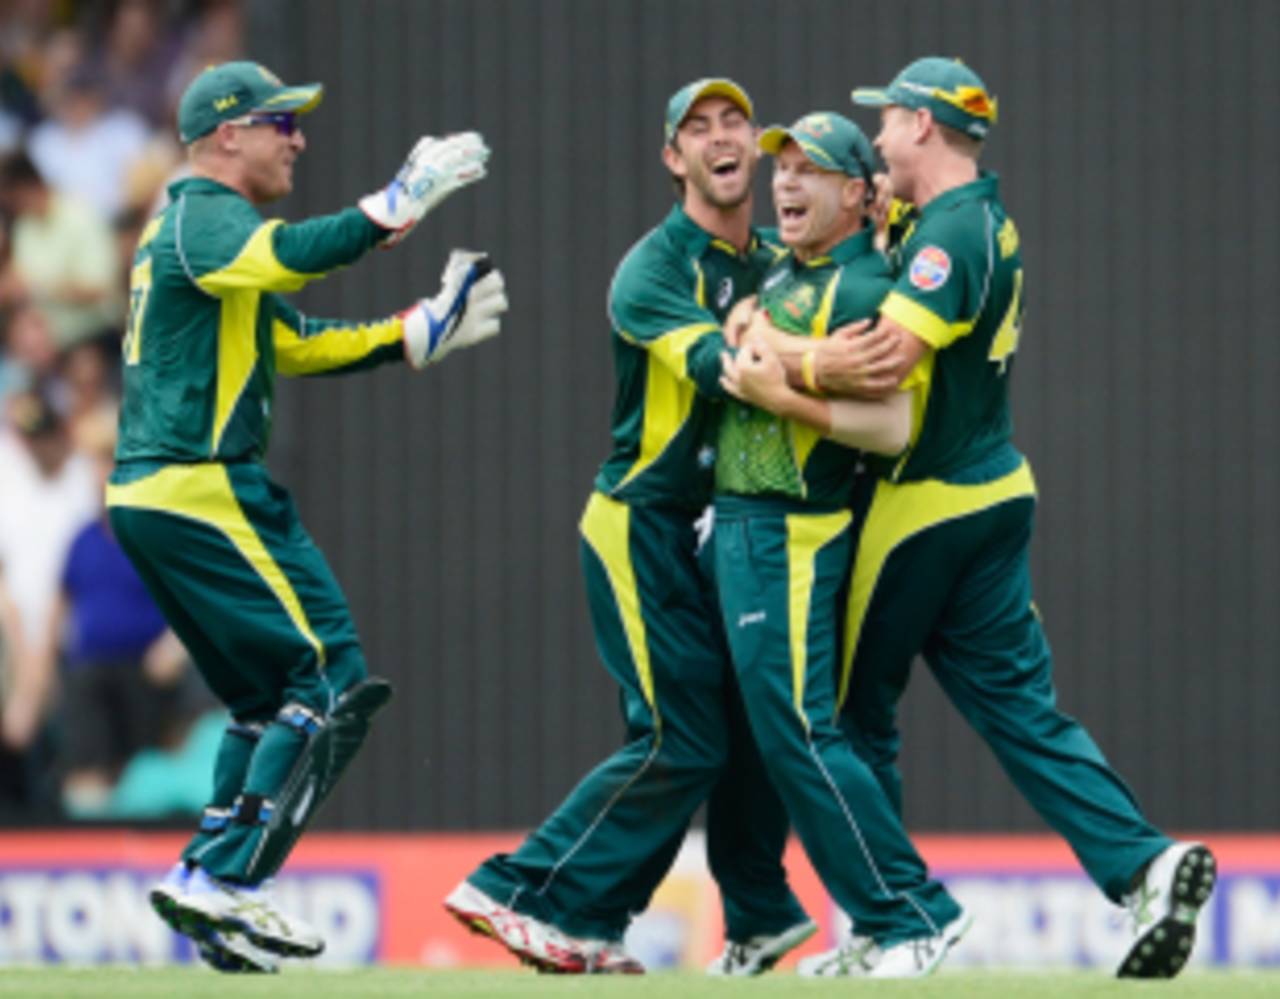 Australia celebrate with David Warner after his direct hit, Australia v England, 3rd ODI, Sydney, January 19, 2014